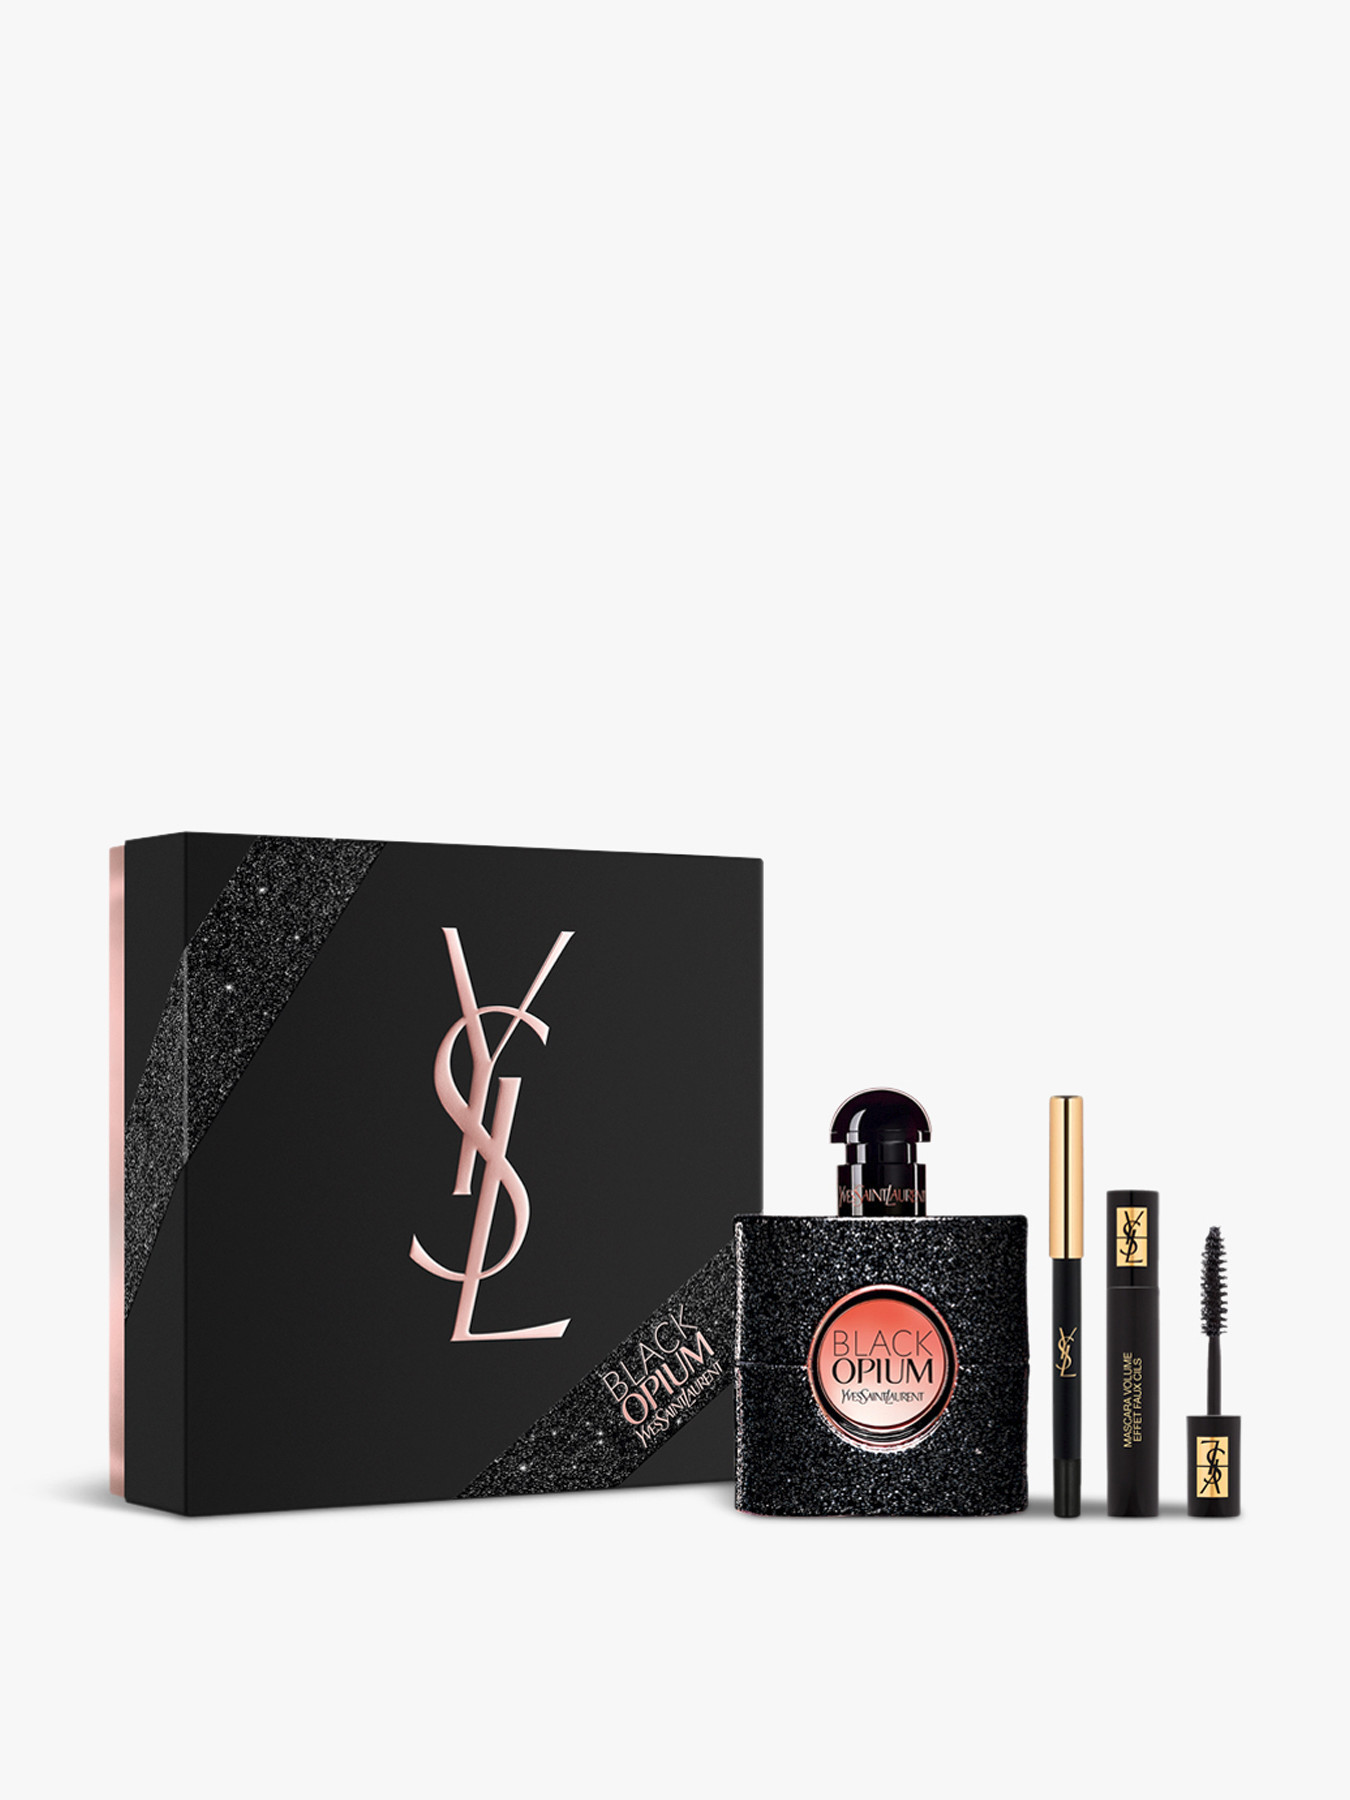 Yves Saint Laurent Black Opium & Eye Must Have Gift Set